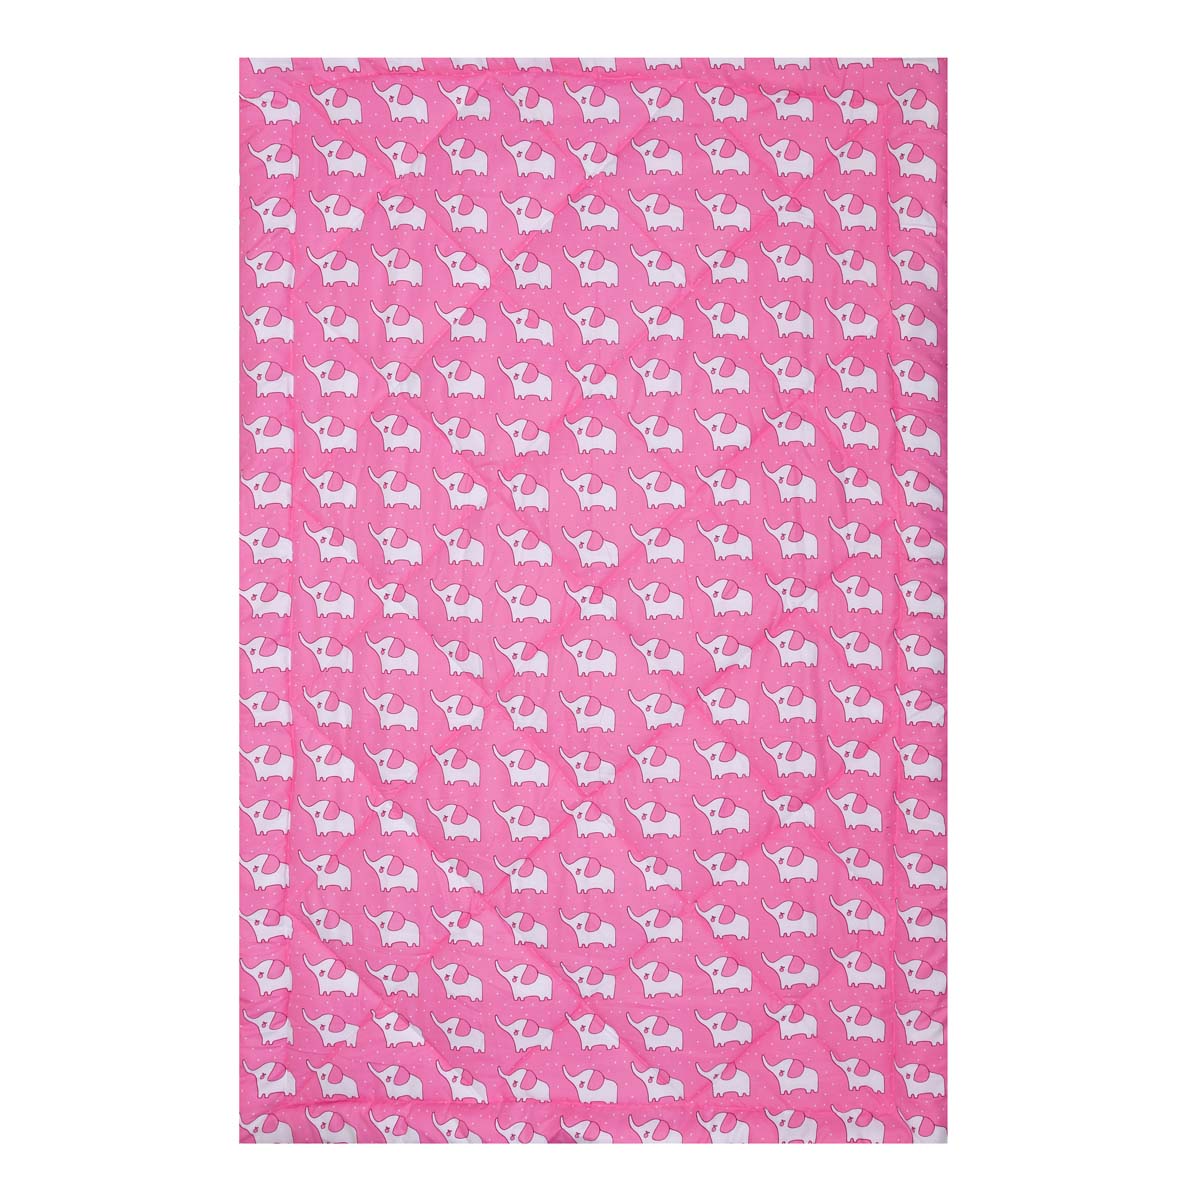 Minitrunks Pink Single Bed Kids Comforter